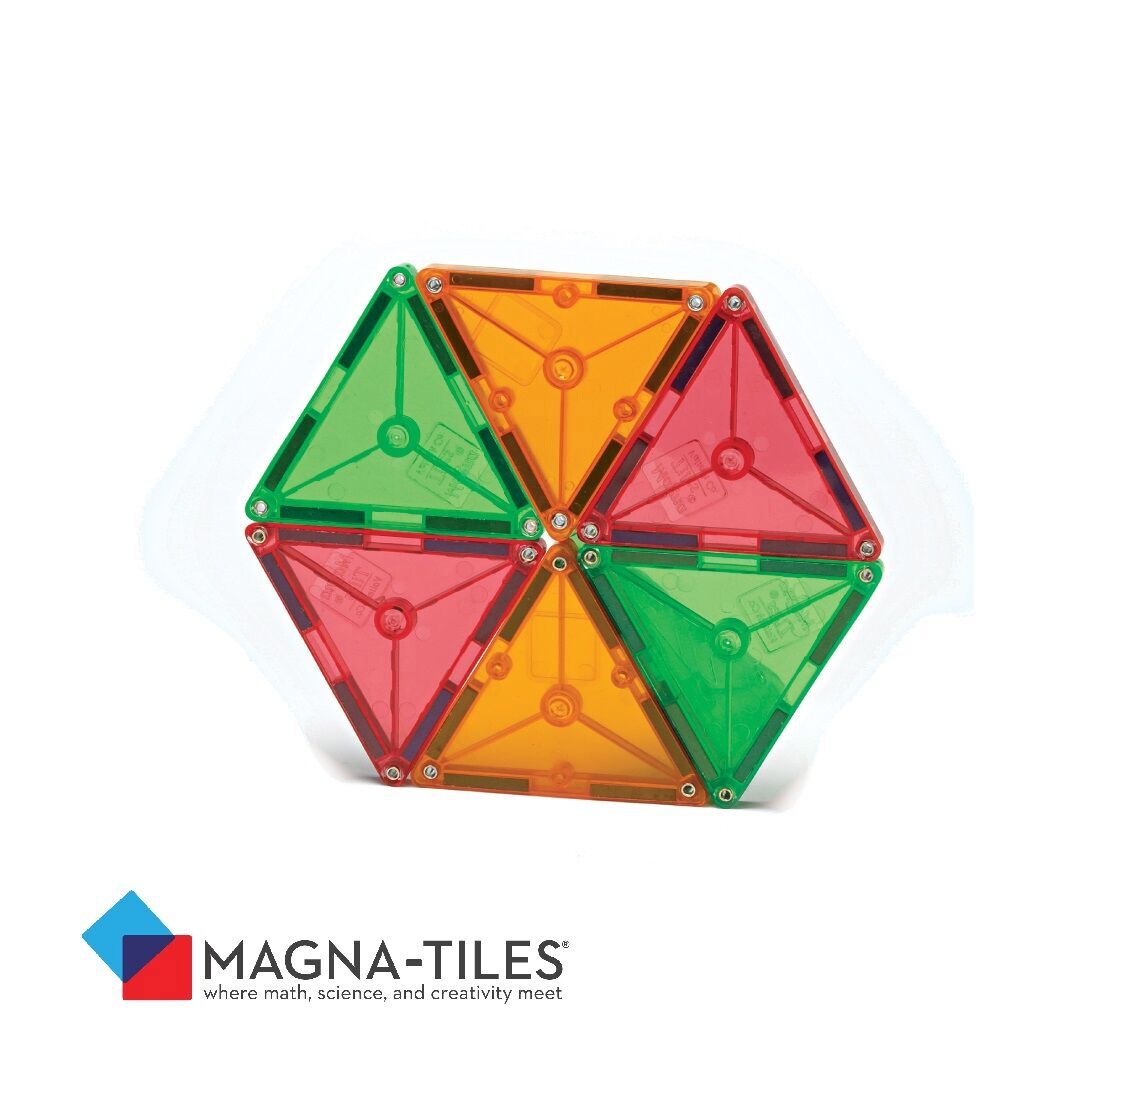 Magna-Tiles Bundle  easypeasy-fair-page